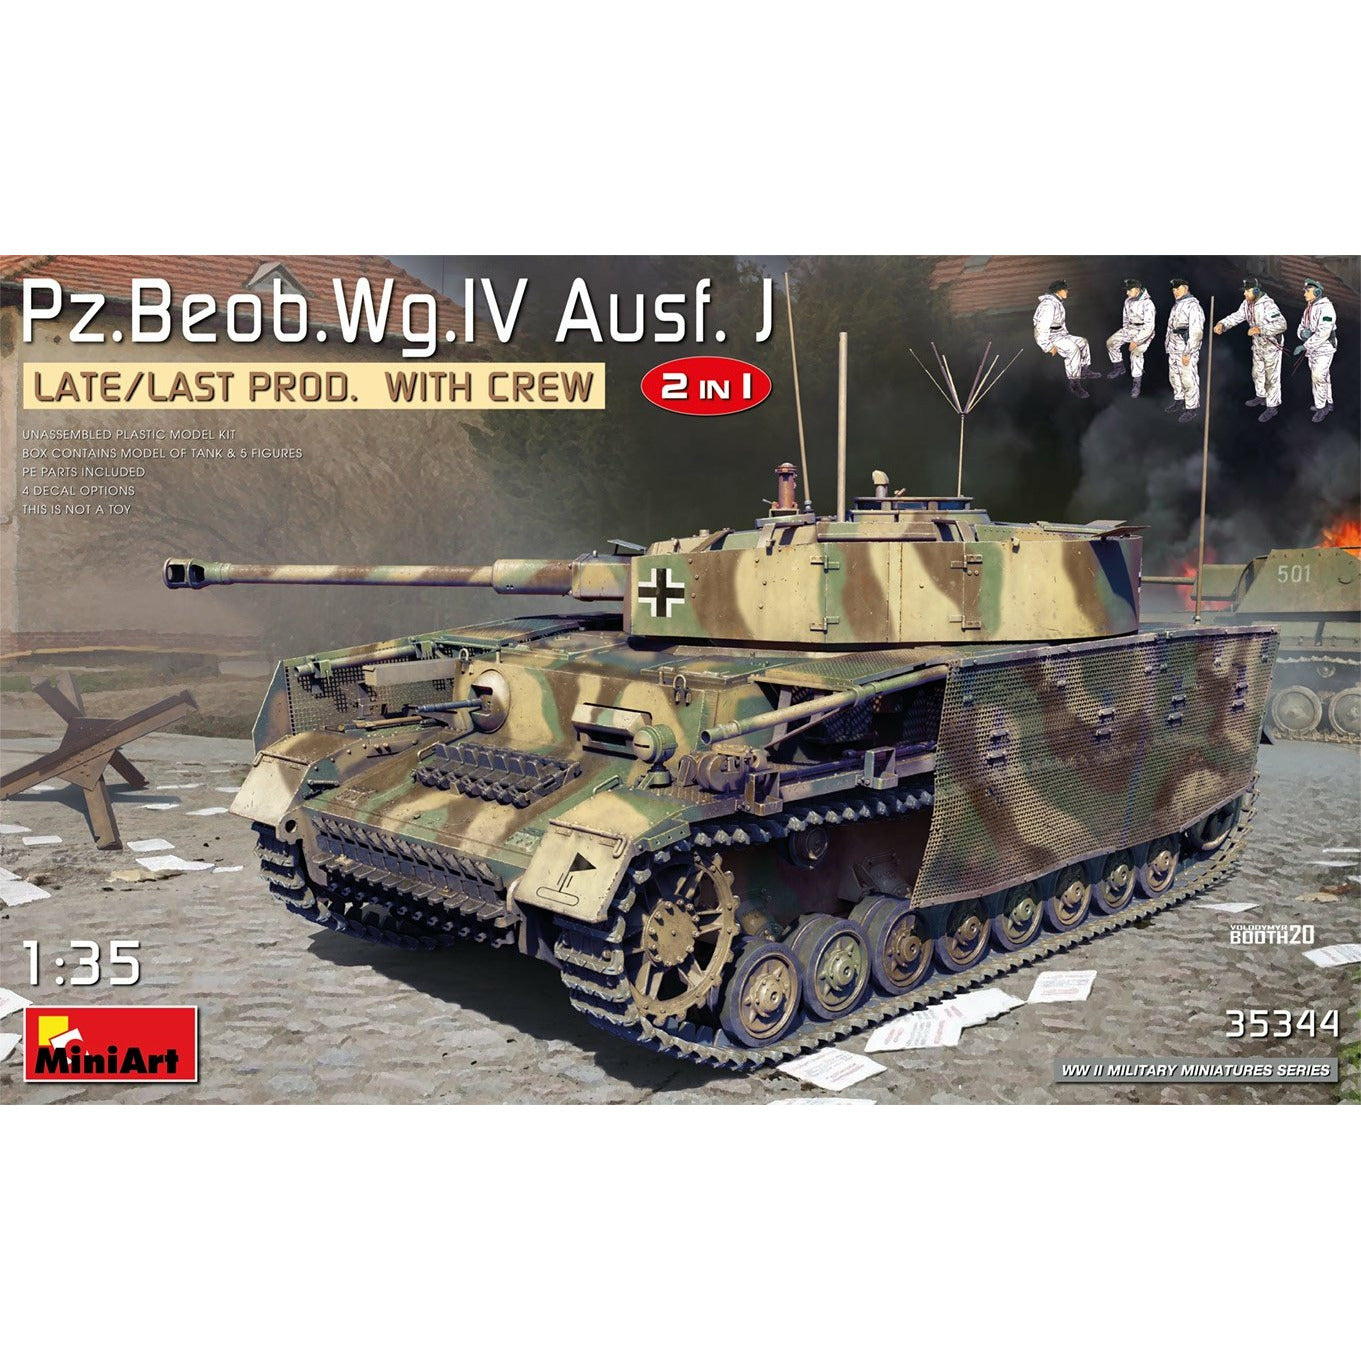 Pz.Beob.Wg.IV Ausf. J Late/Last Prod. 2 in 1 with Crew 1/35 #35344 by MiniArt